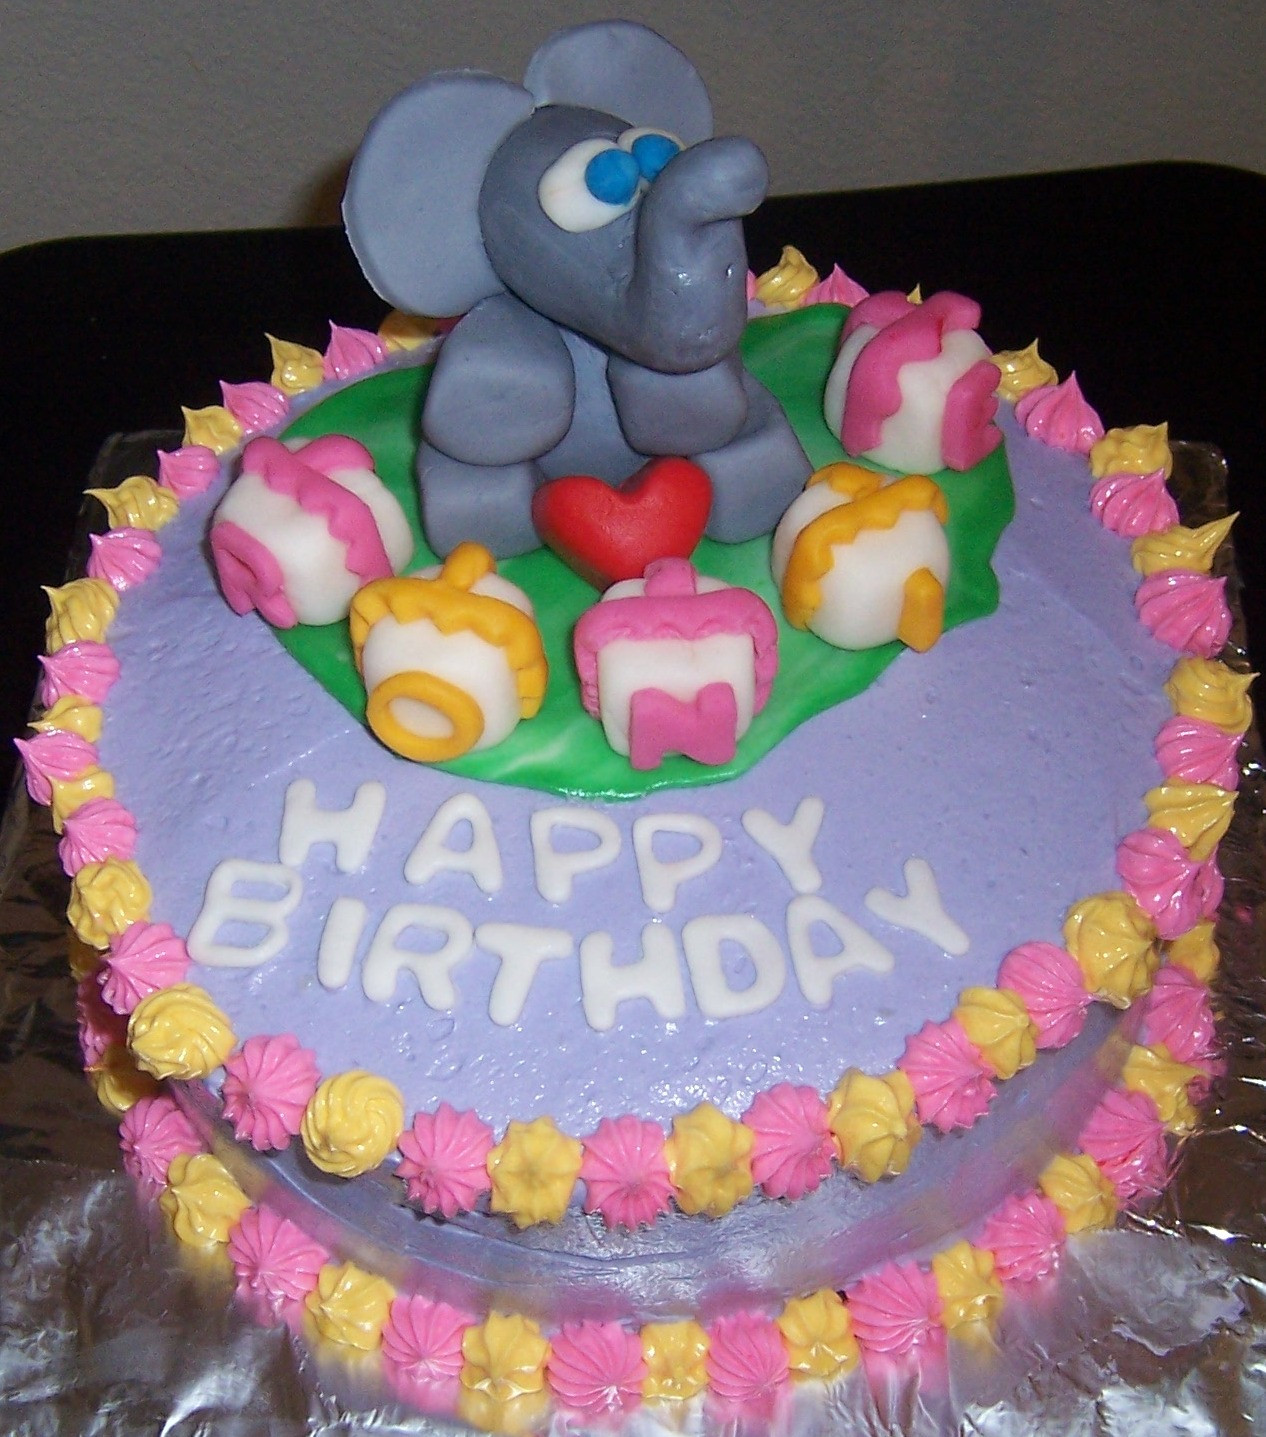 Best ideas about Elephant Birthday Cake
. Save or Pin Sweet Creations Elephant Birthday Cake Now.